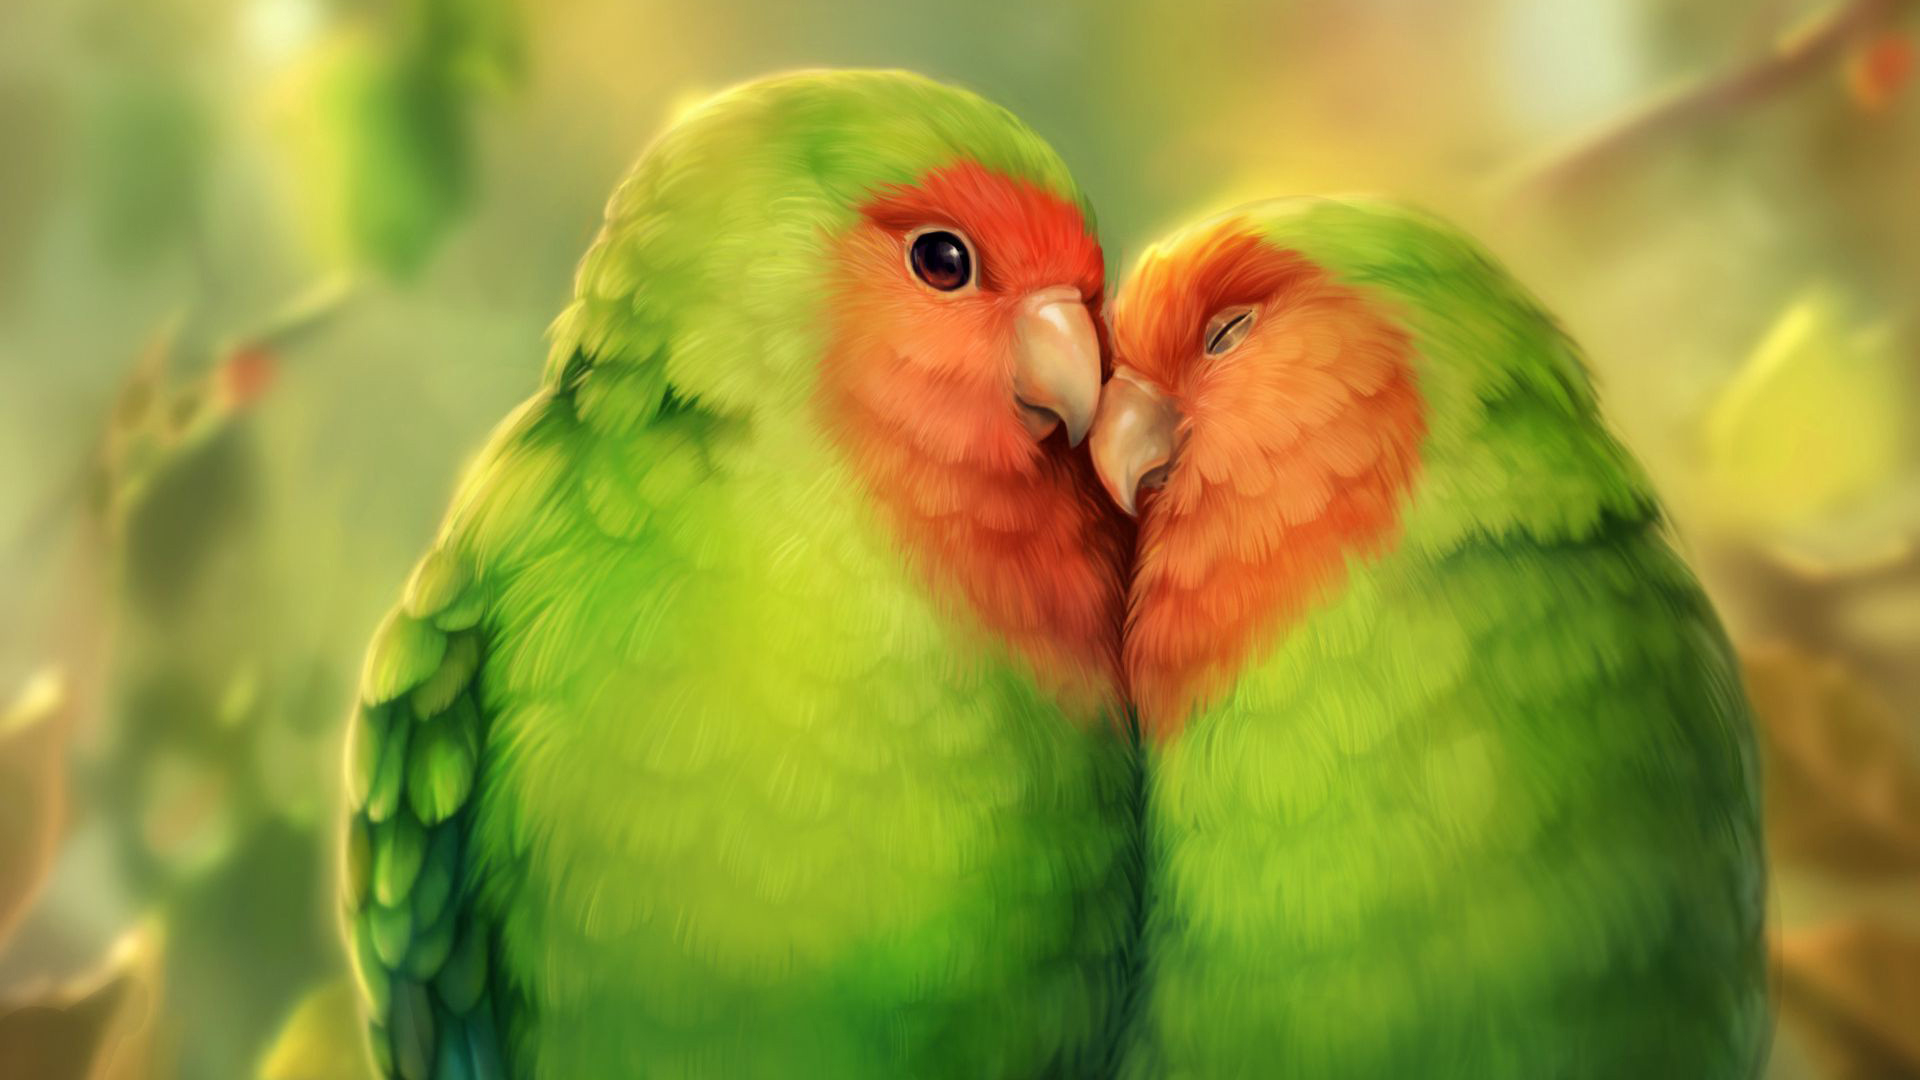 1920x1080 Desktop Wallpaper Parrot, Birds, Love, Hd Image, Picture, Background, 52c80c